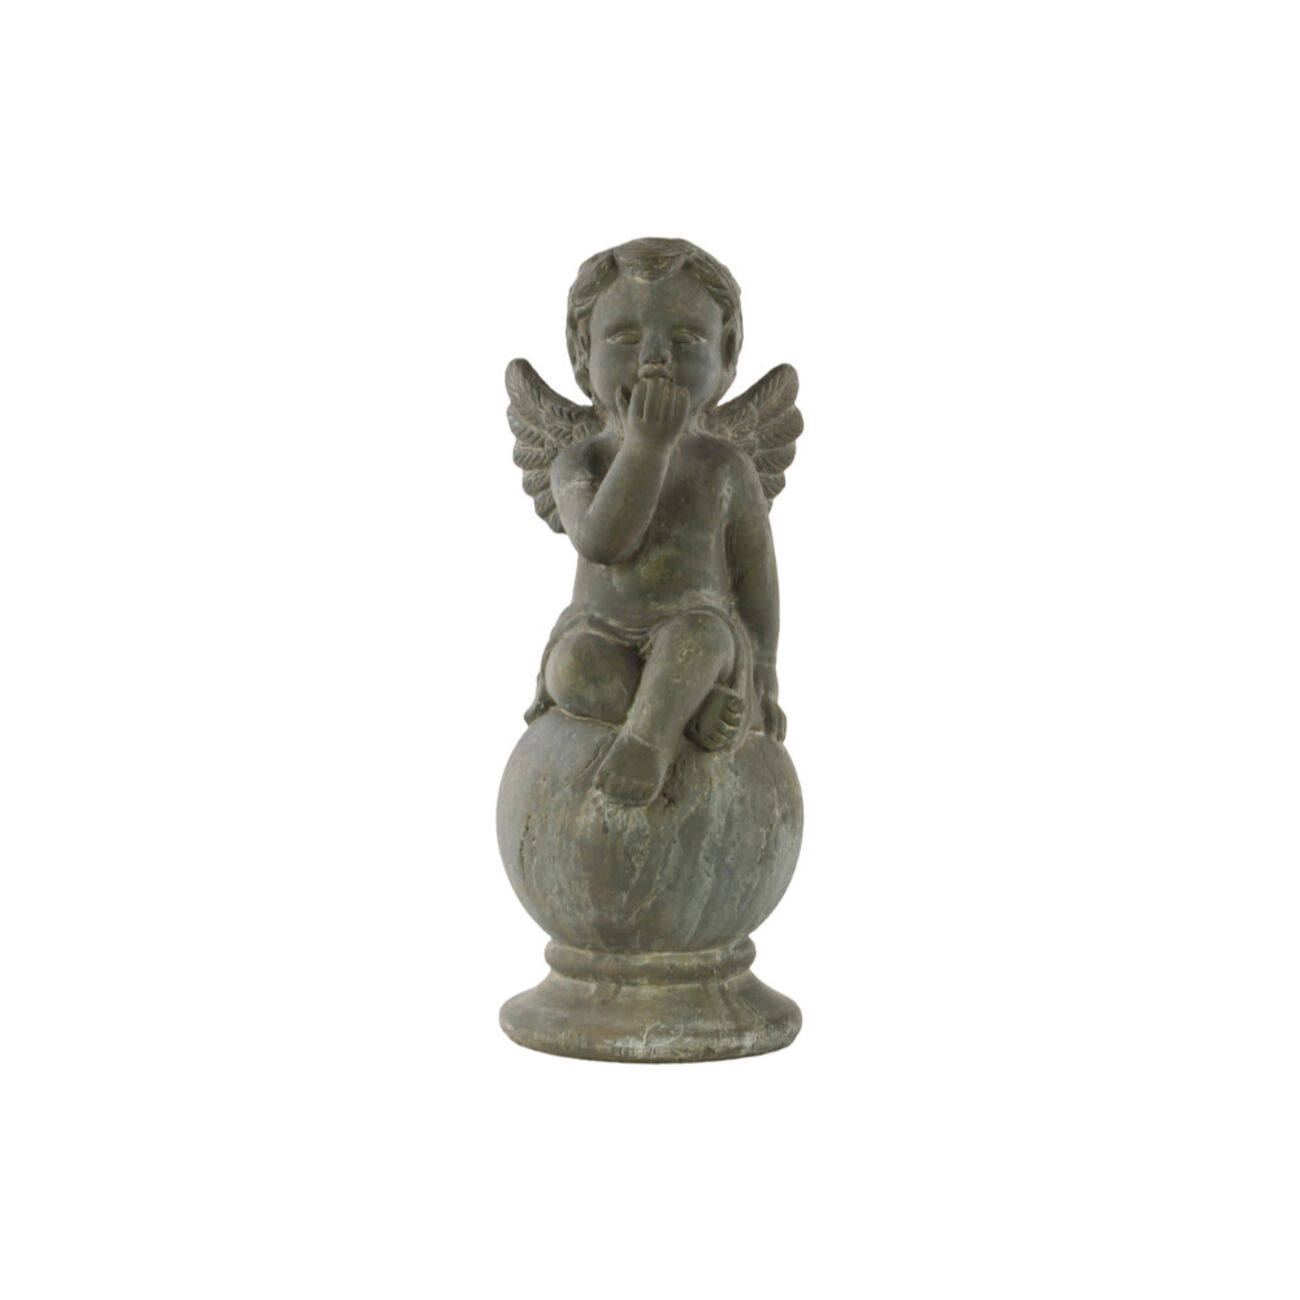 Cemented Sitting Cherub Figurine On Spherical Pedestal, Gray